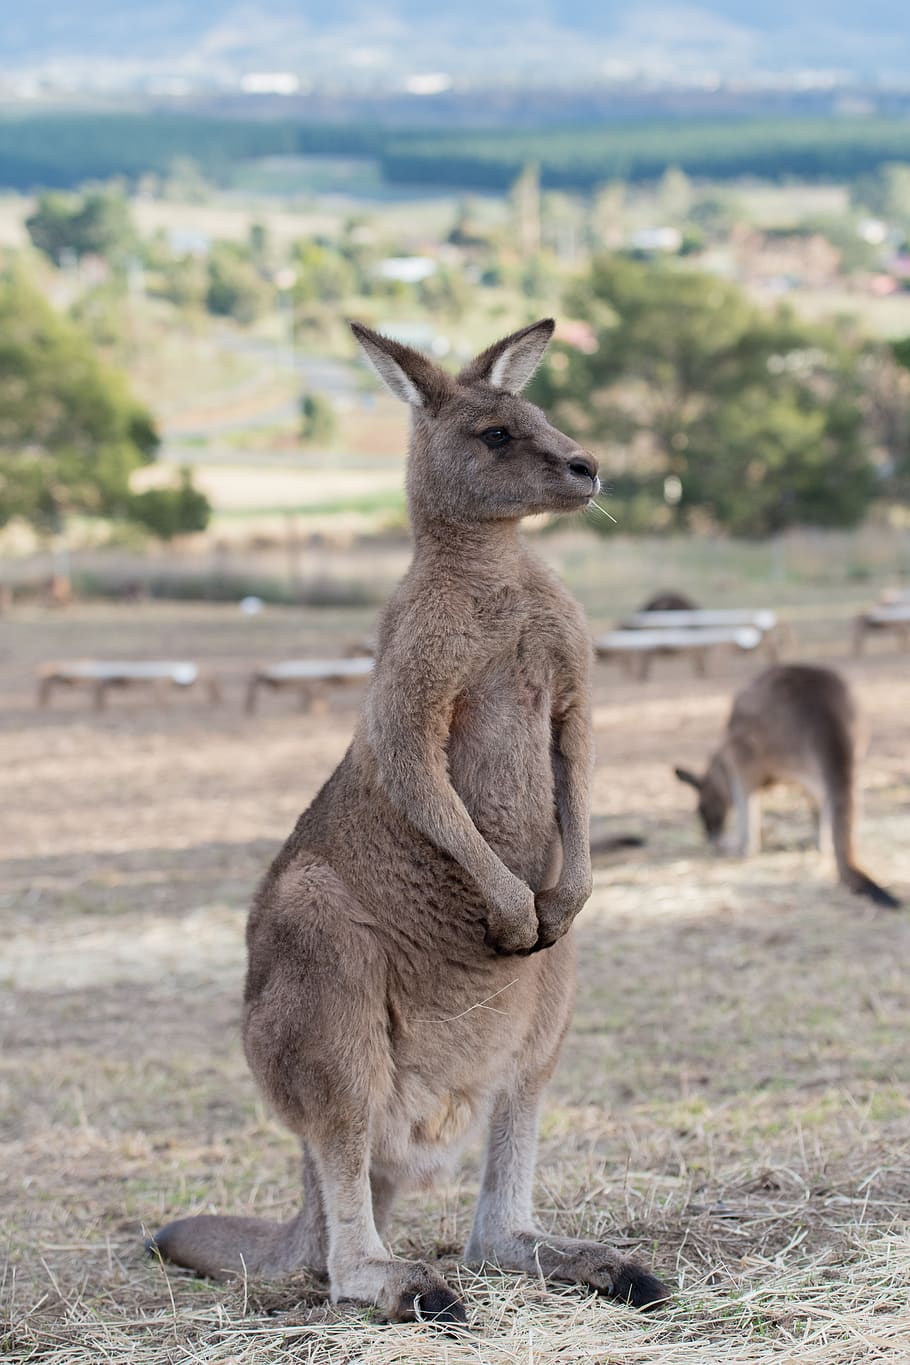 kangaroo, marsupial, mammal, wildlife, animal, australia, wild, nature, fauna, australian